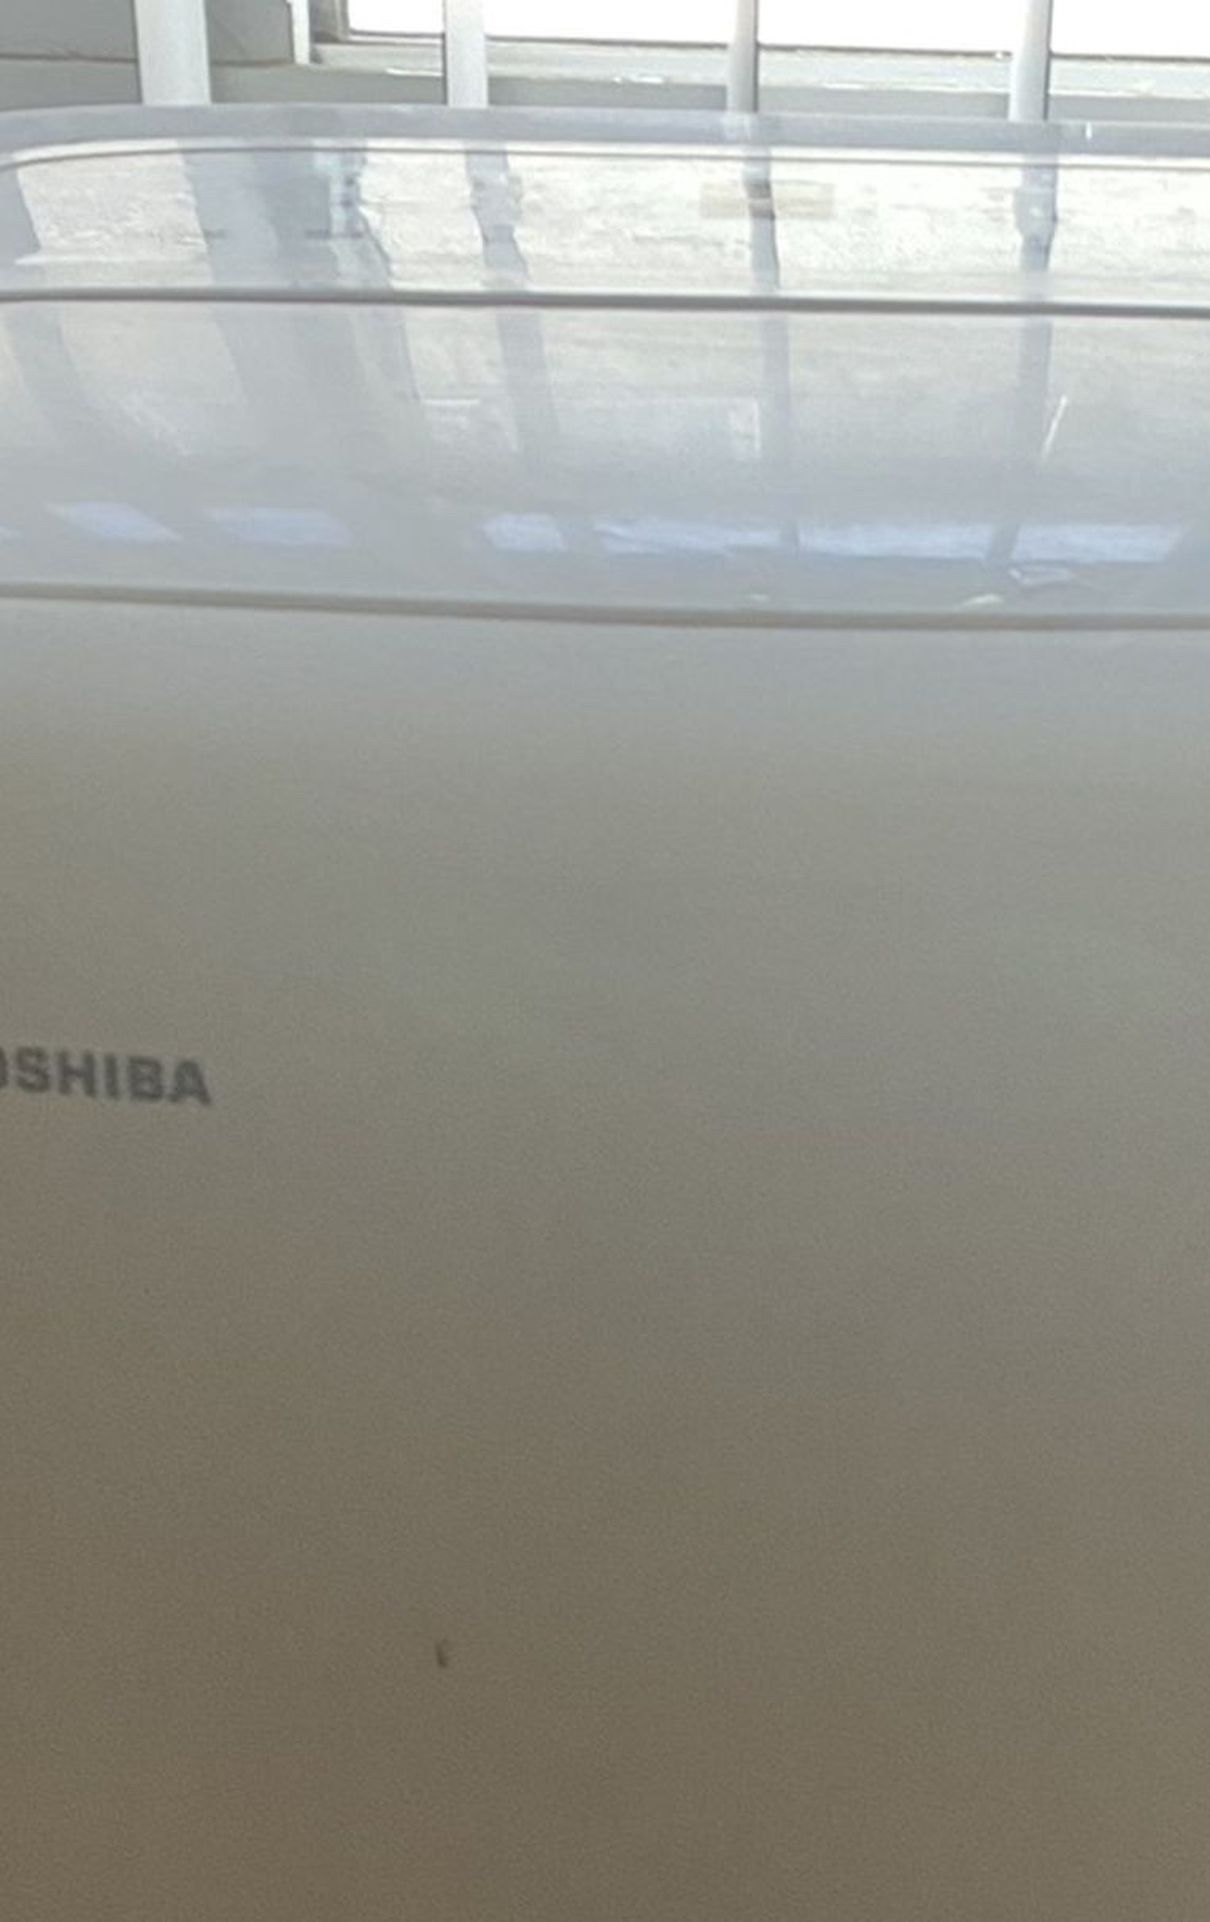 Toshiba 12k BTU Portable Air Conditioner